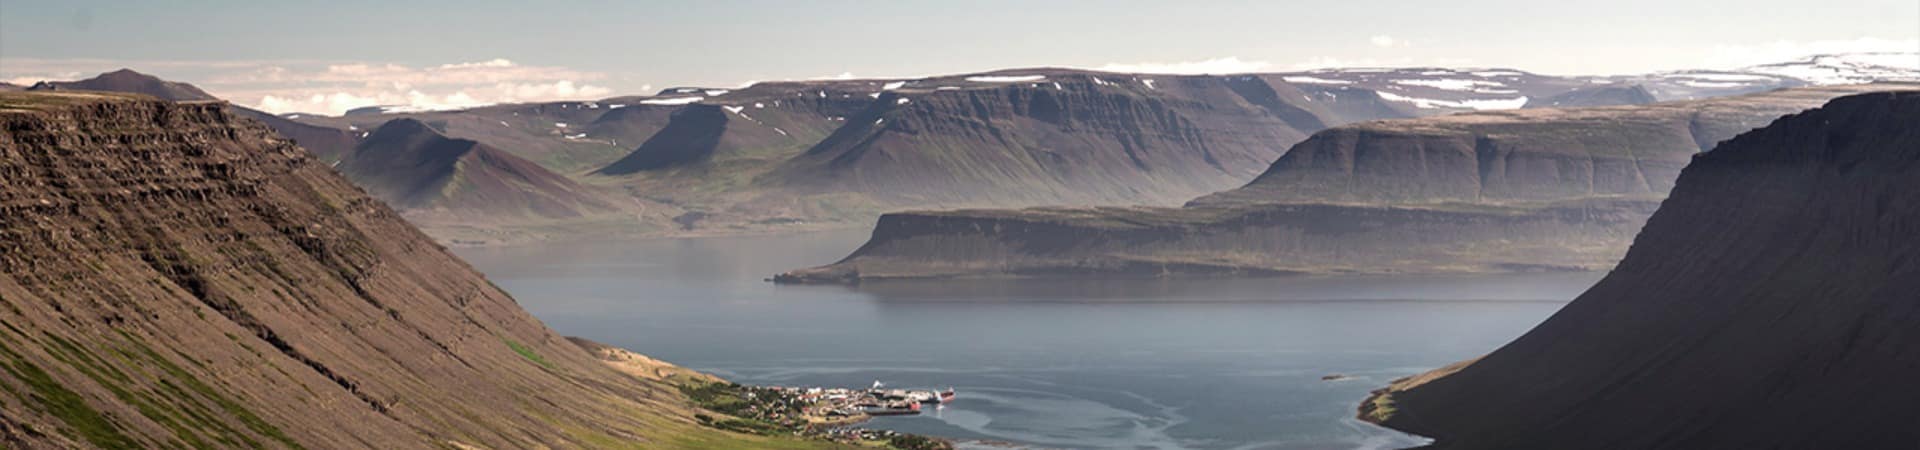 Islandia patreksfjordur lago vale